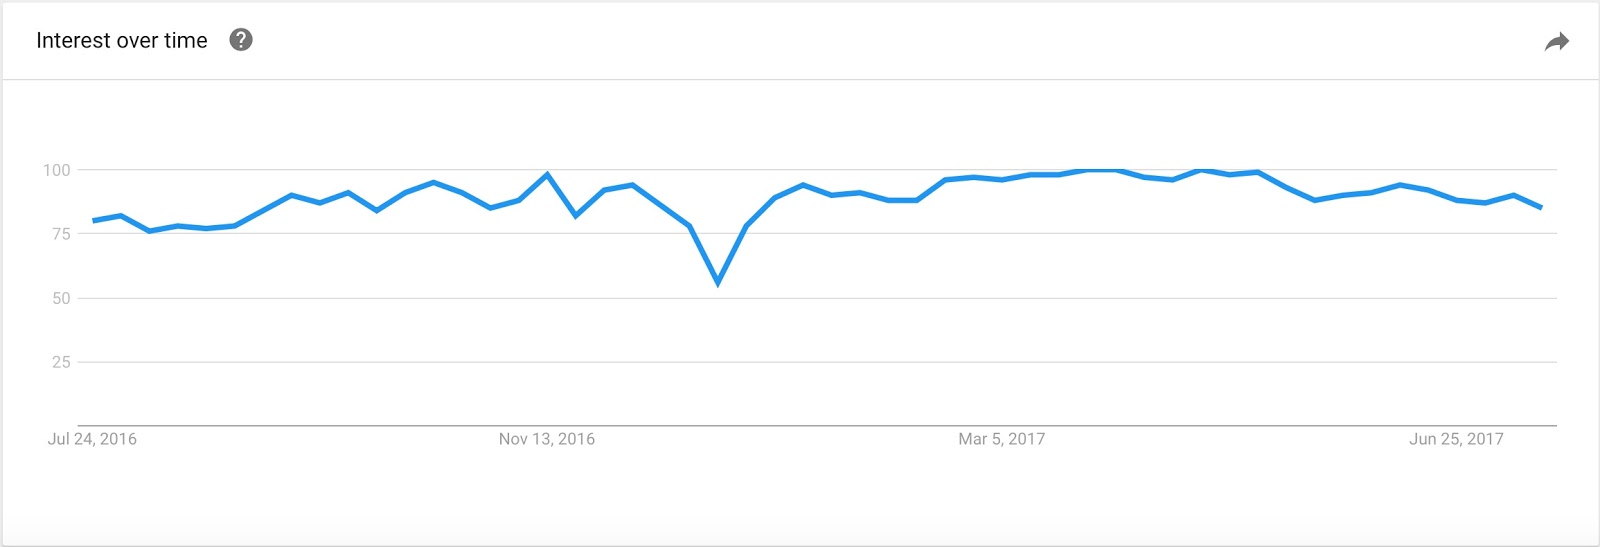 content marketing Explore Google Trends